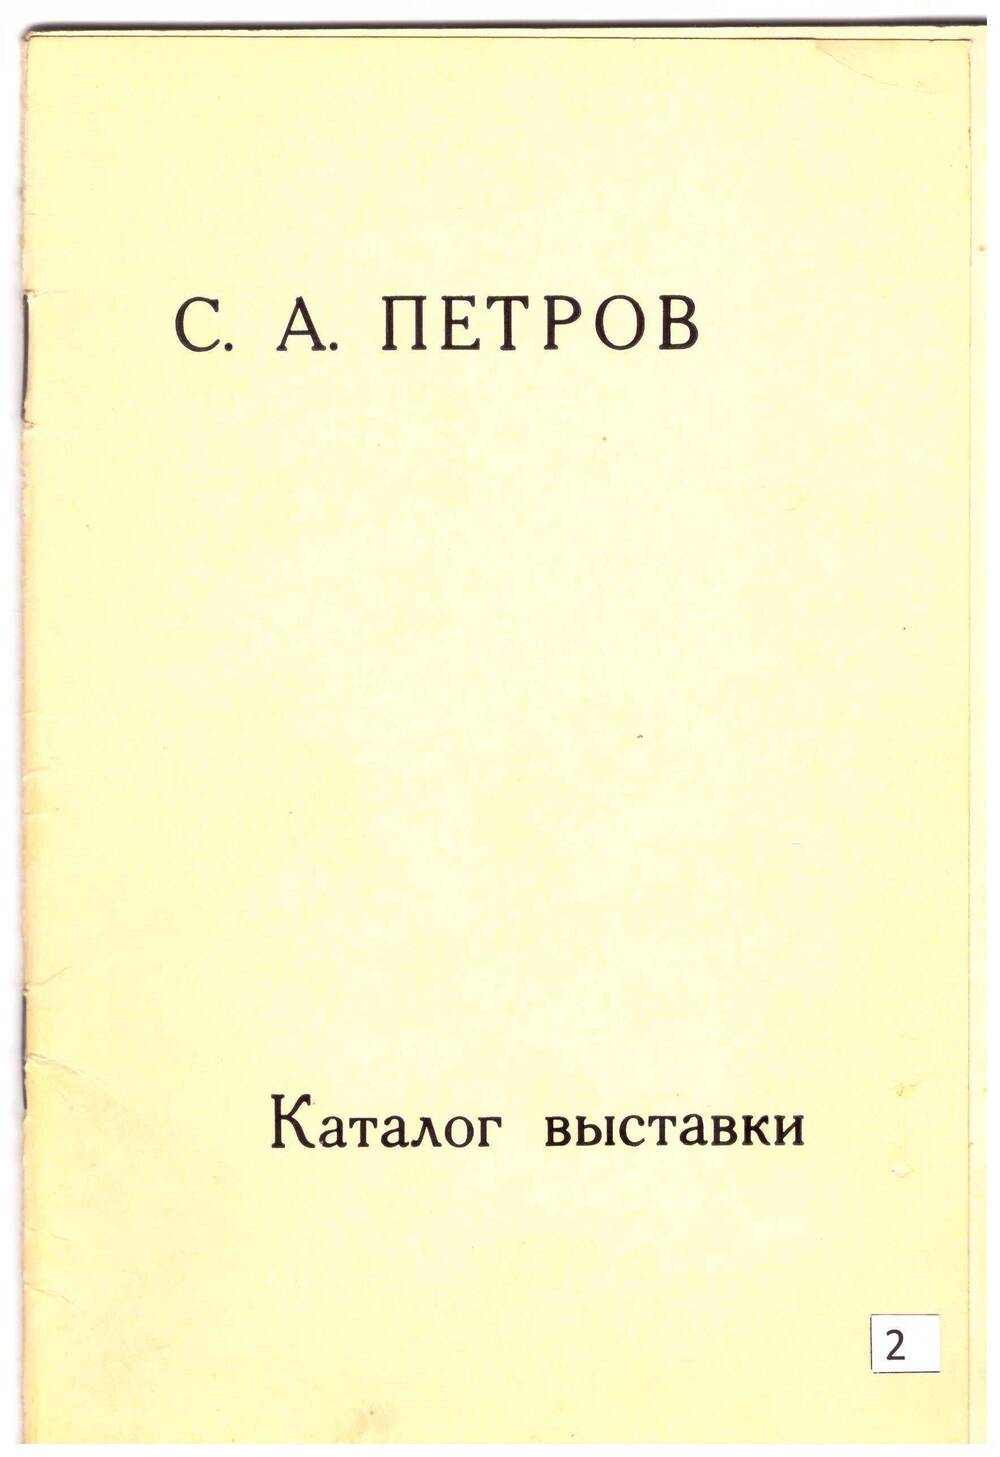 С. А. Петров каталог выставки 1964г.